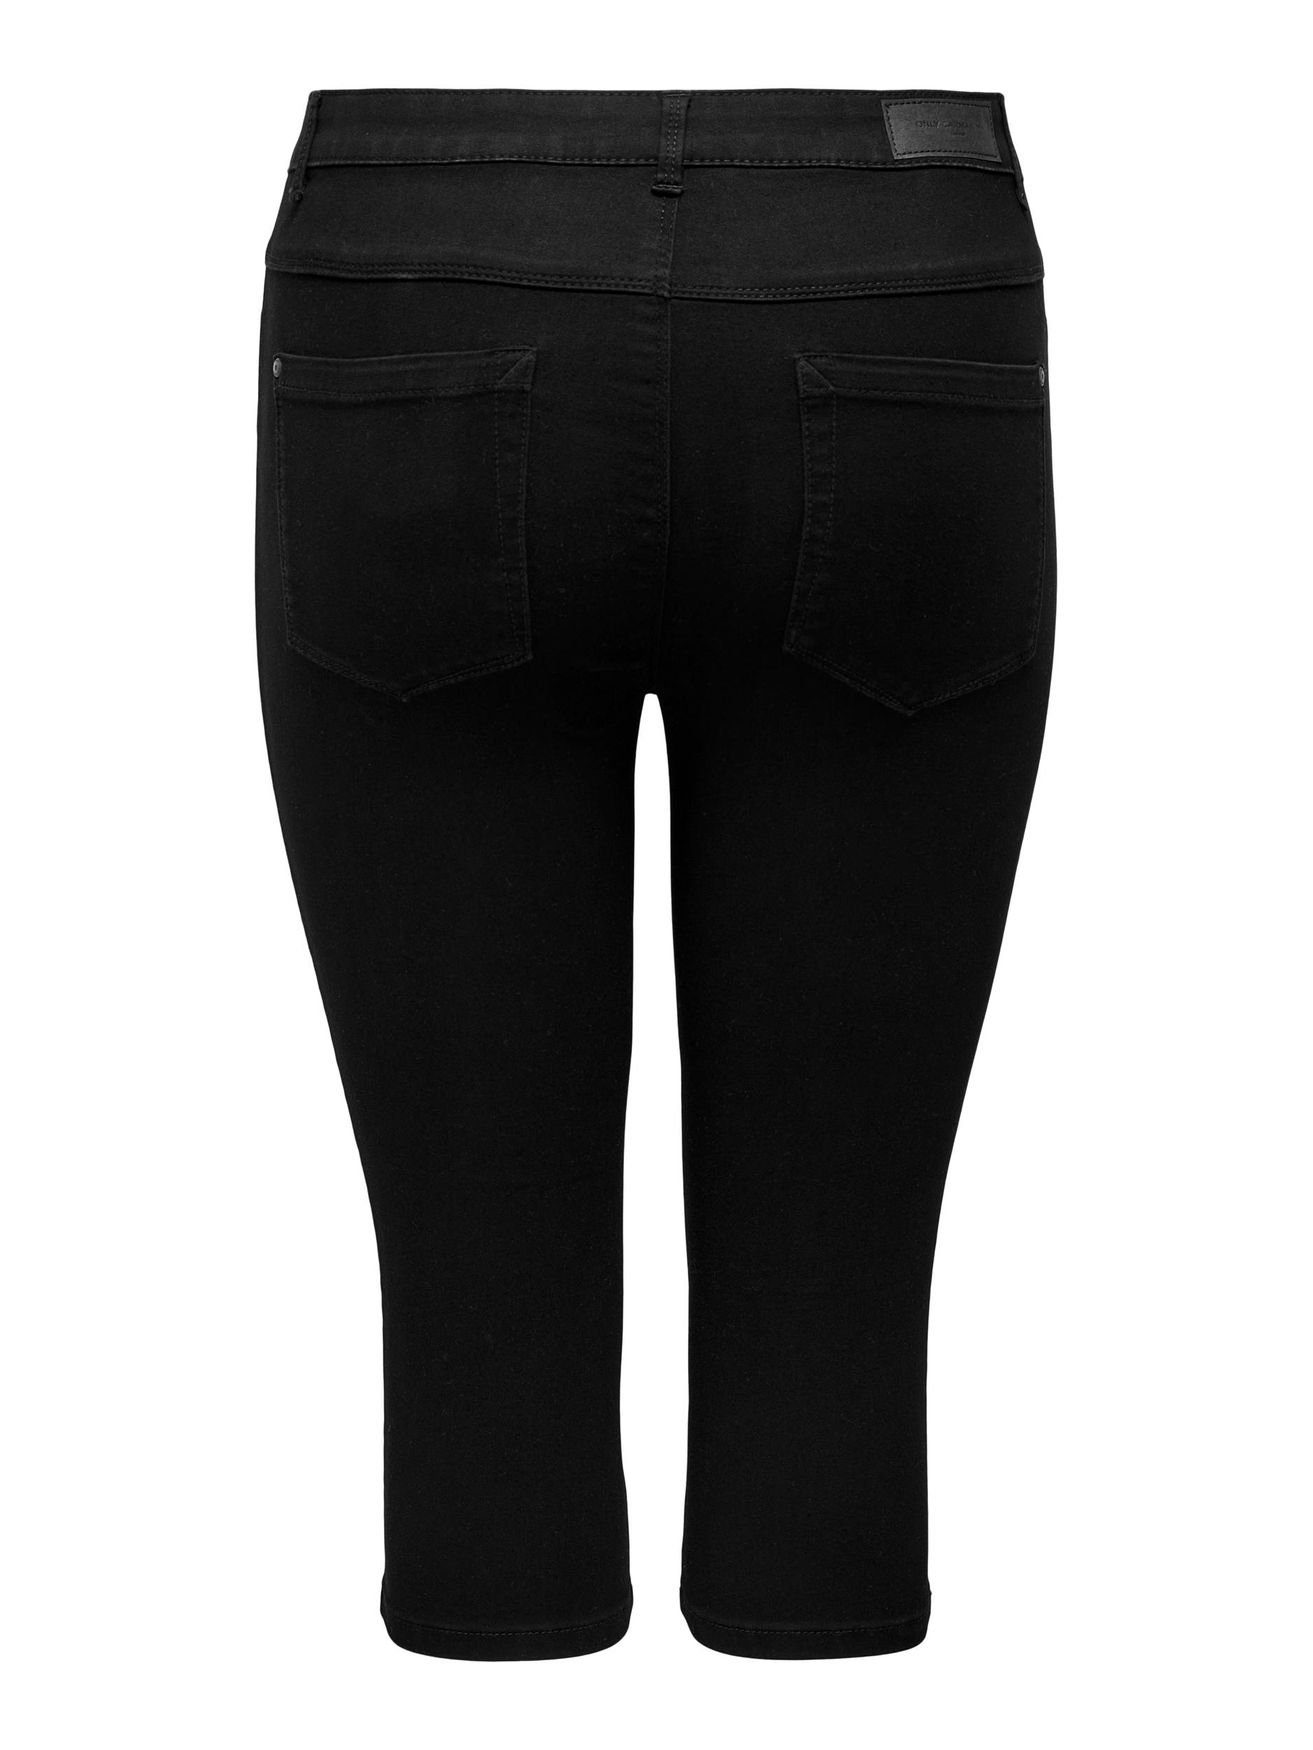 in CARAUGUSTA Size Hose Übergröße CARMAKOMA Shorts 3/4Capri Schwarz 4794 Caprihose Jeans Denim Plus ONLY